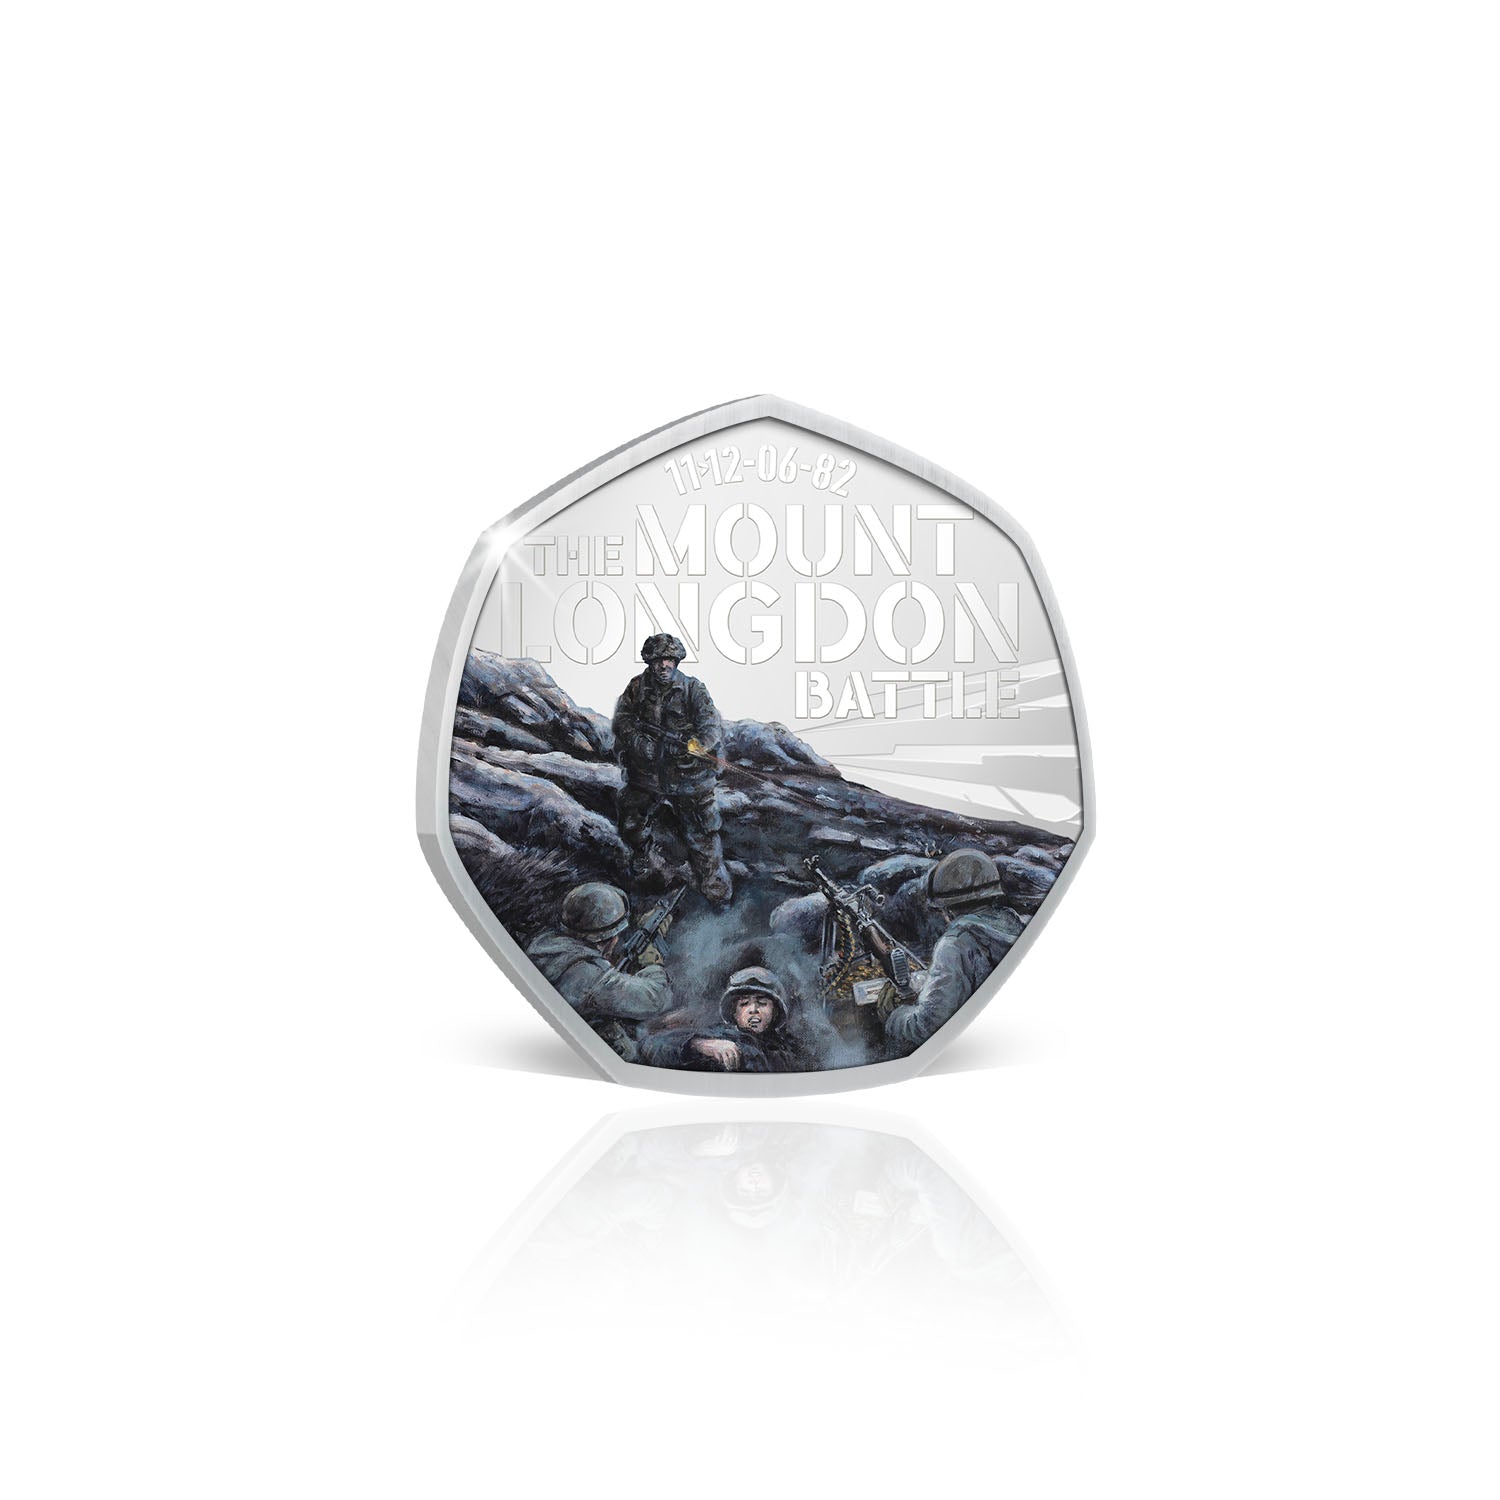 Mount Longdon in Coin Holder